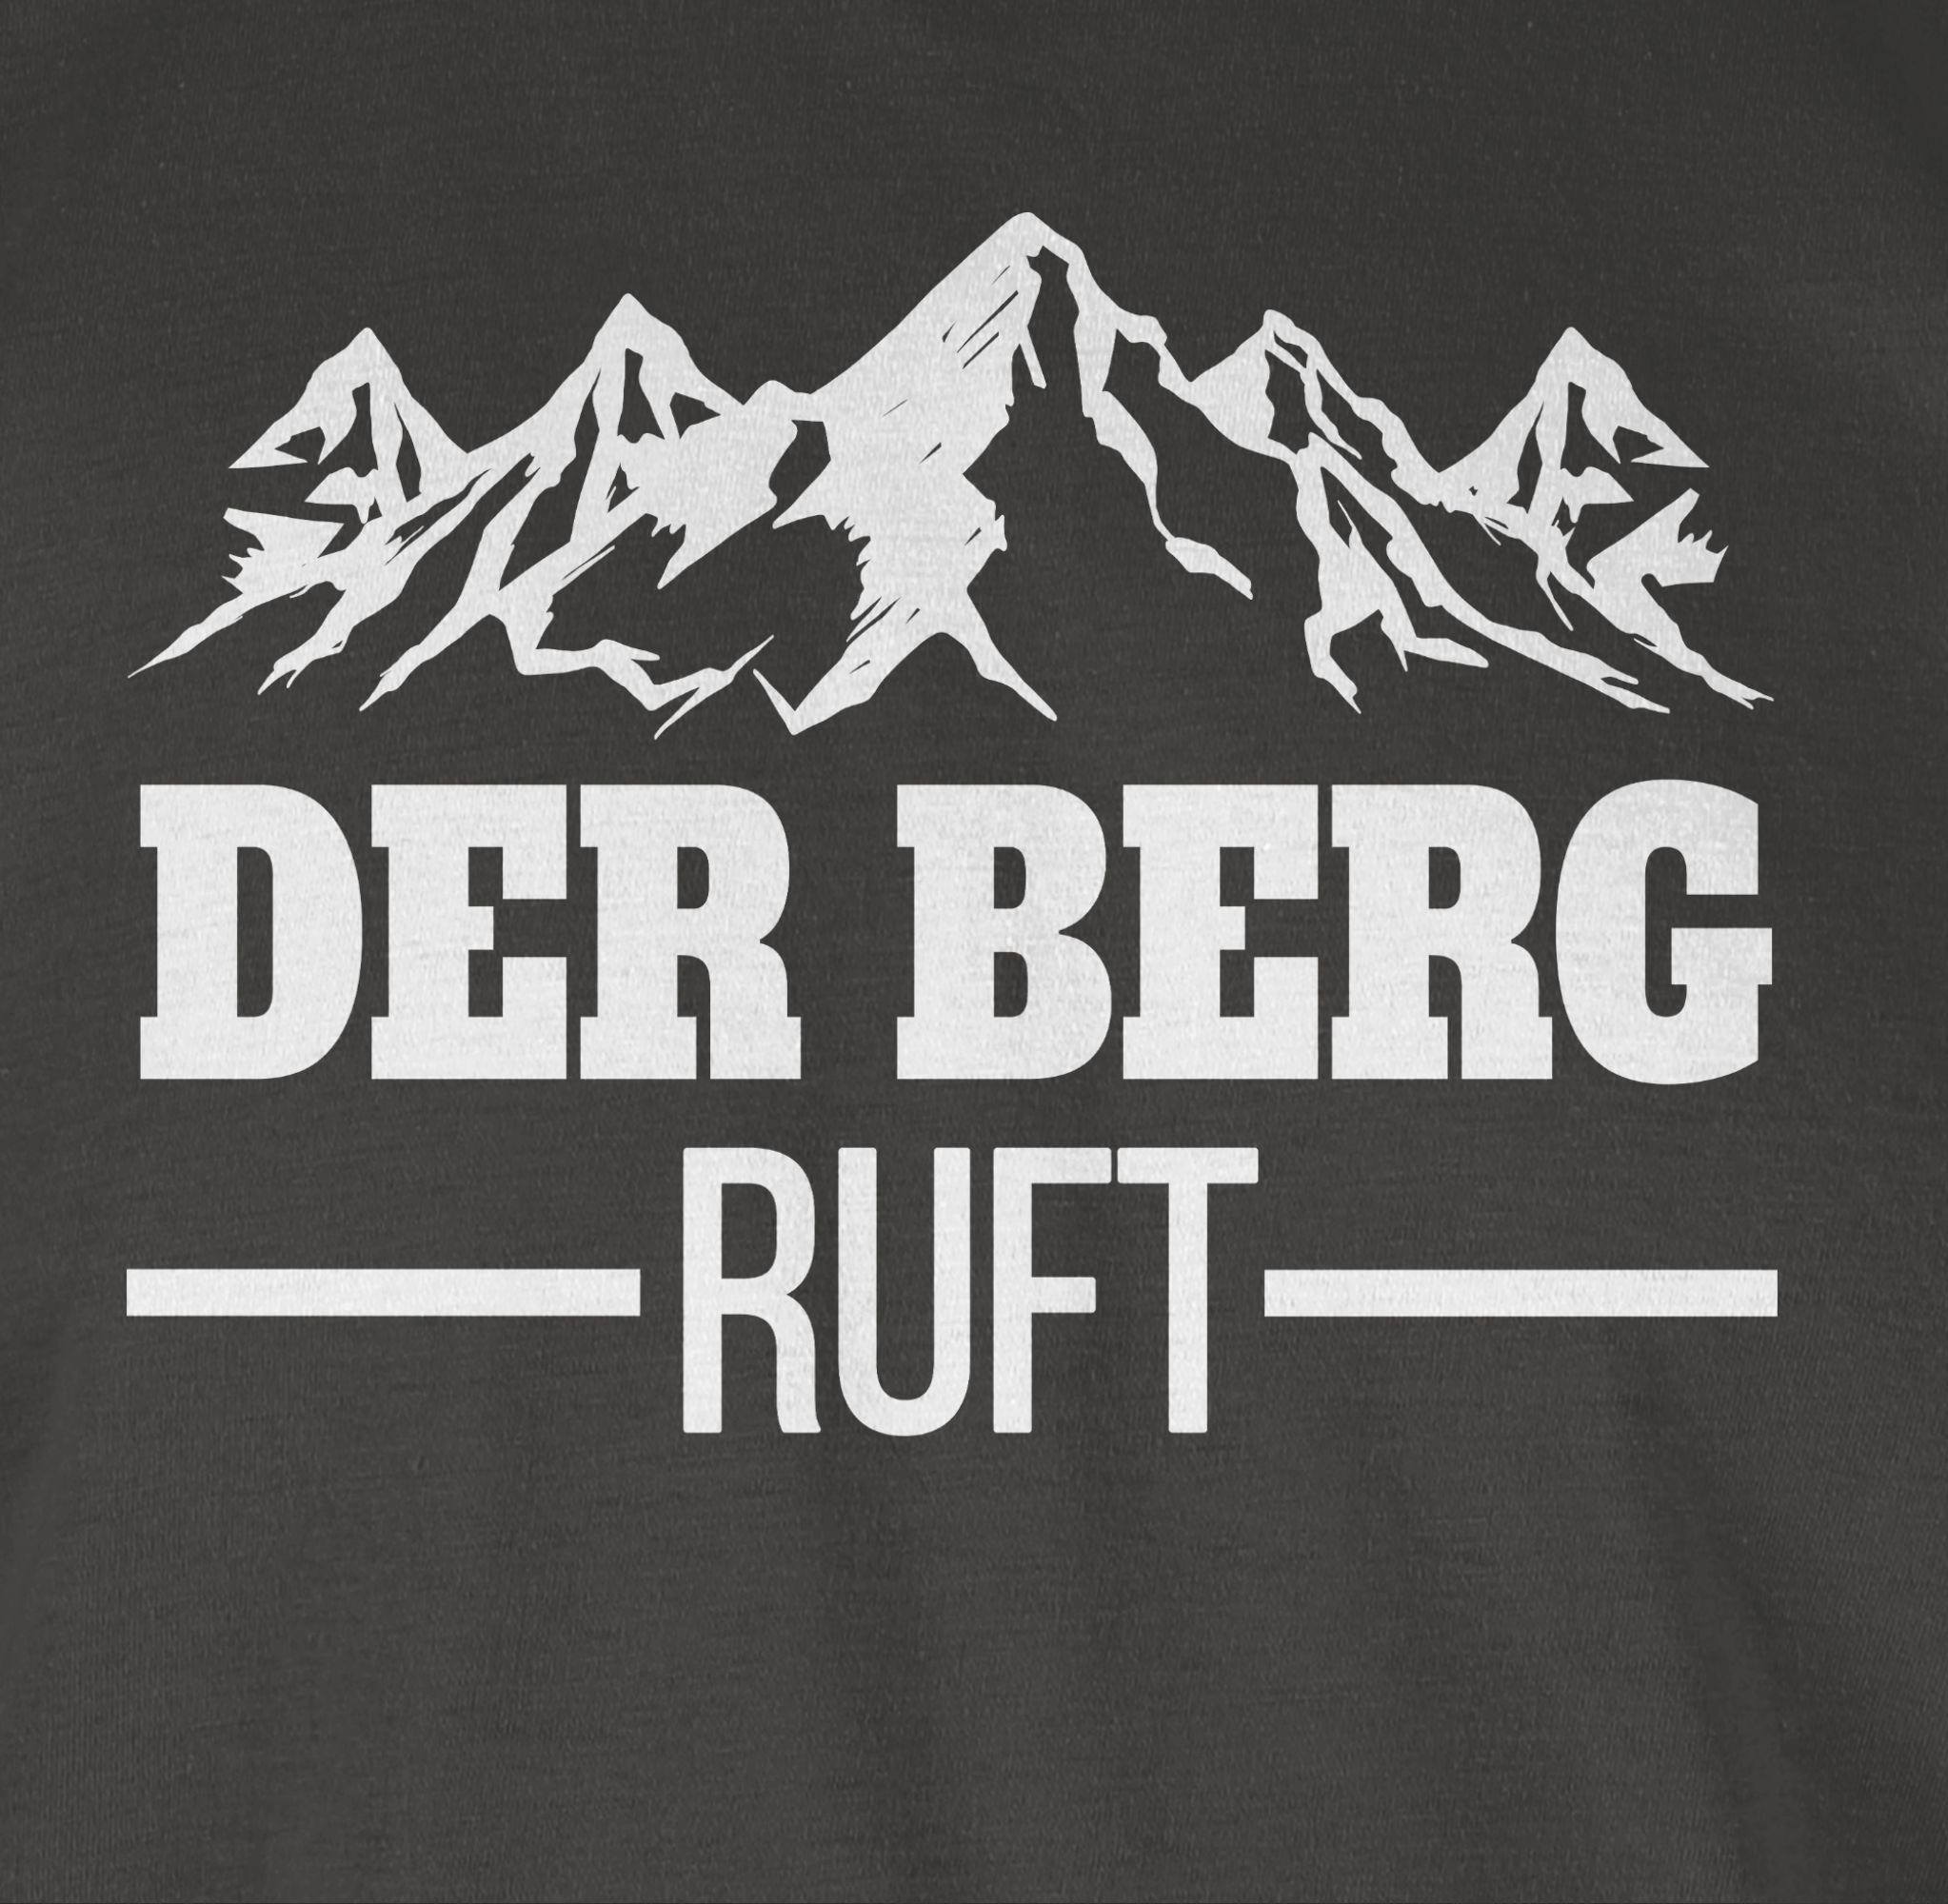 Apres Dunkelgrau Der Ski Party T-Shirt Berg 03 ruft Shirtracer